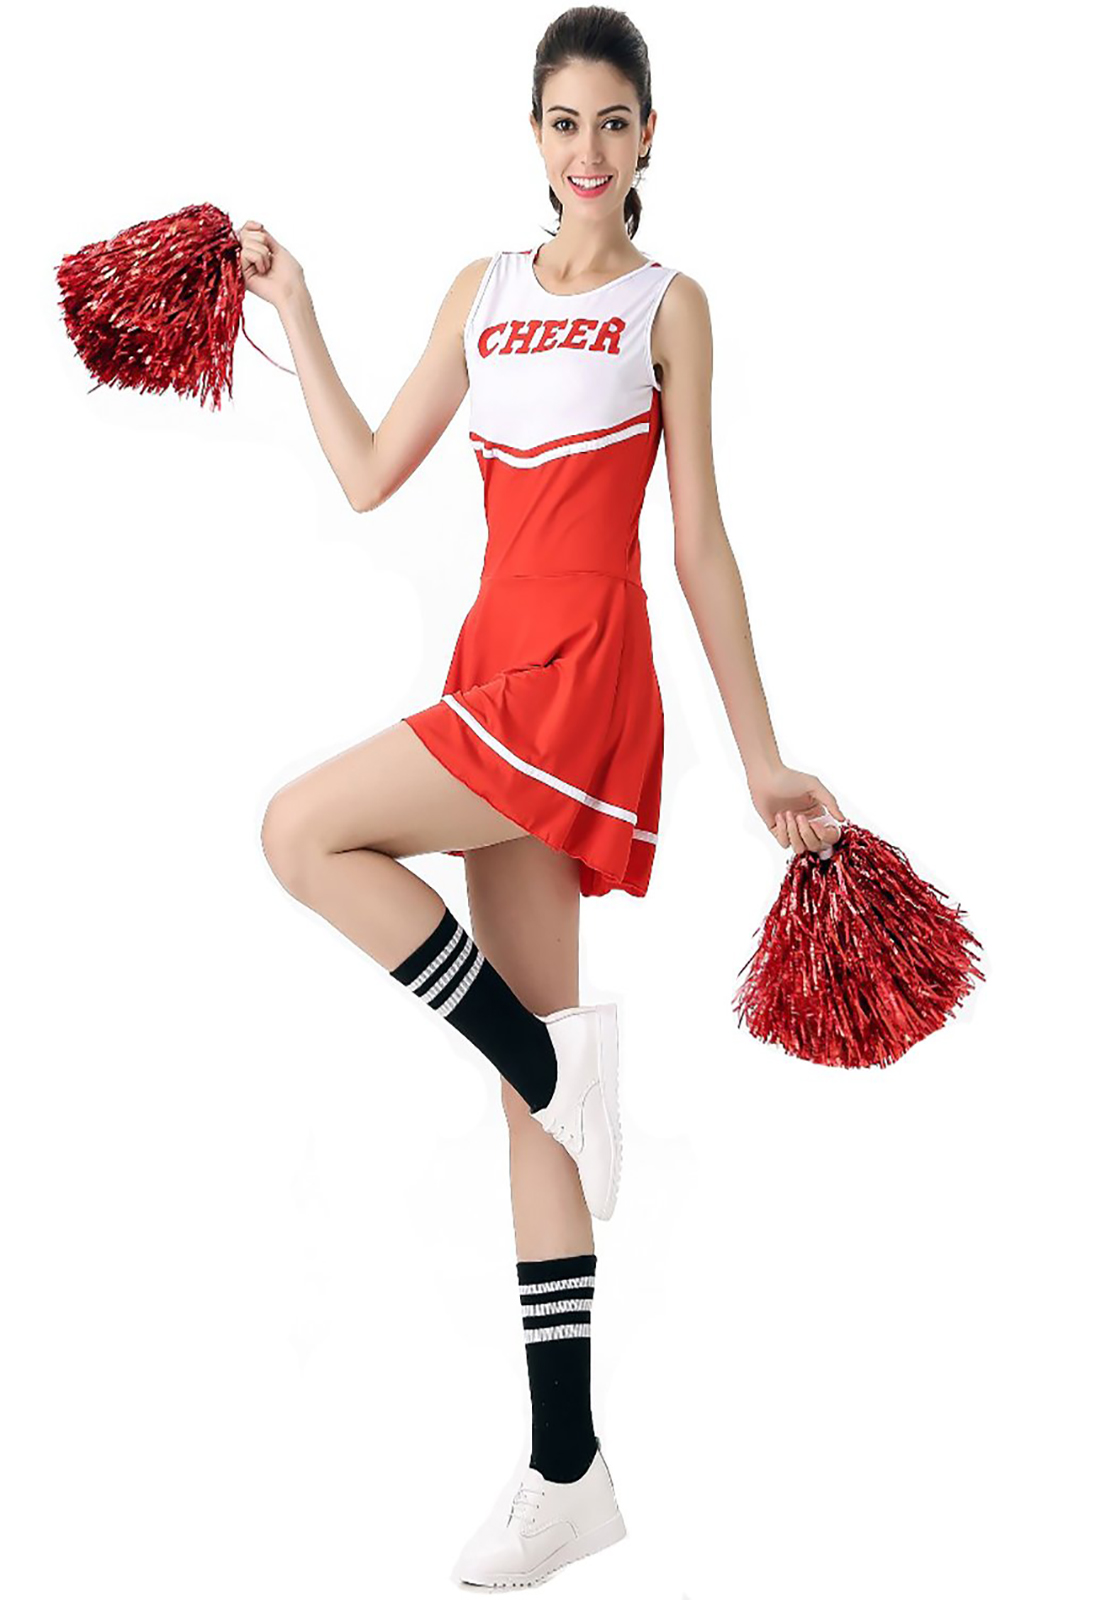 Red Cheerleader Costume Fancy Dress High School Musical Cheerleading Uniform No Pom-Pom